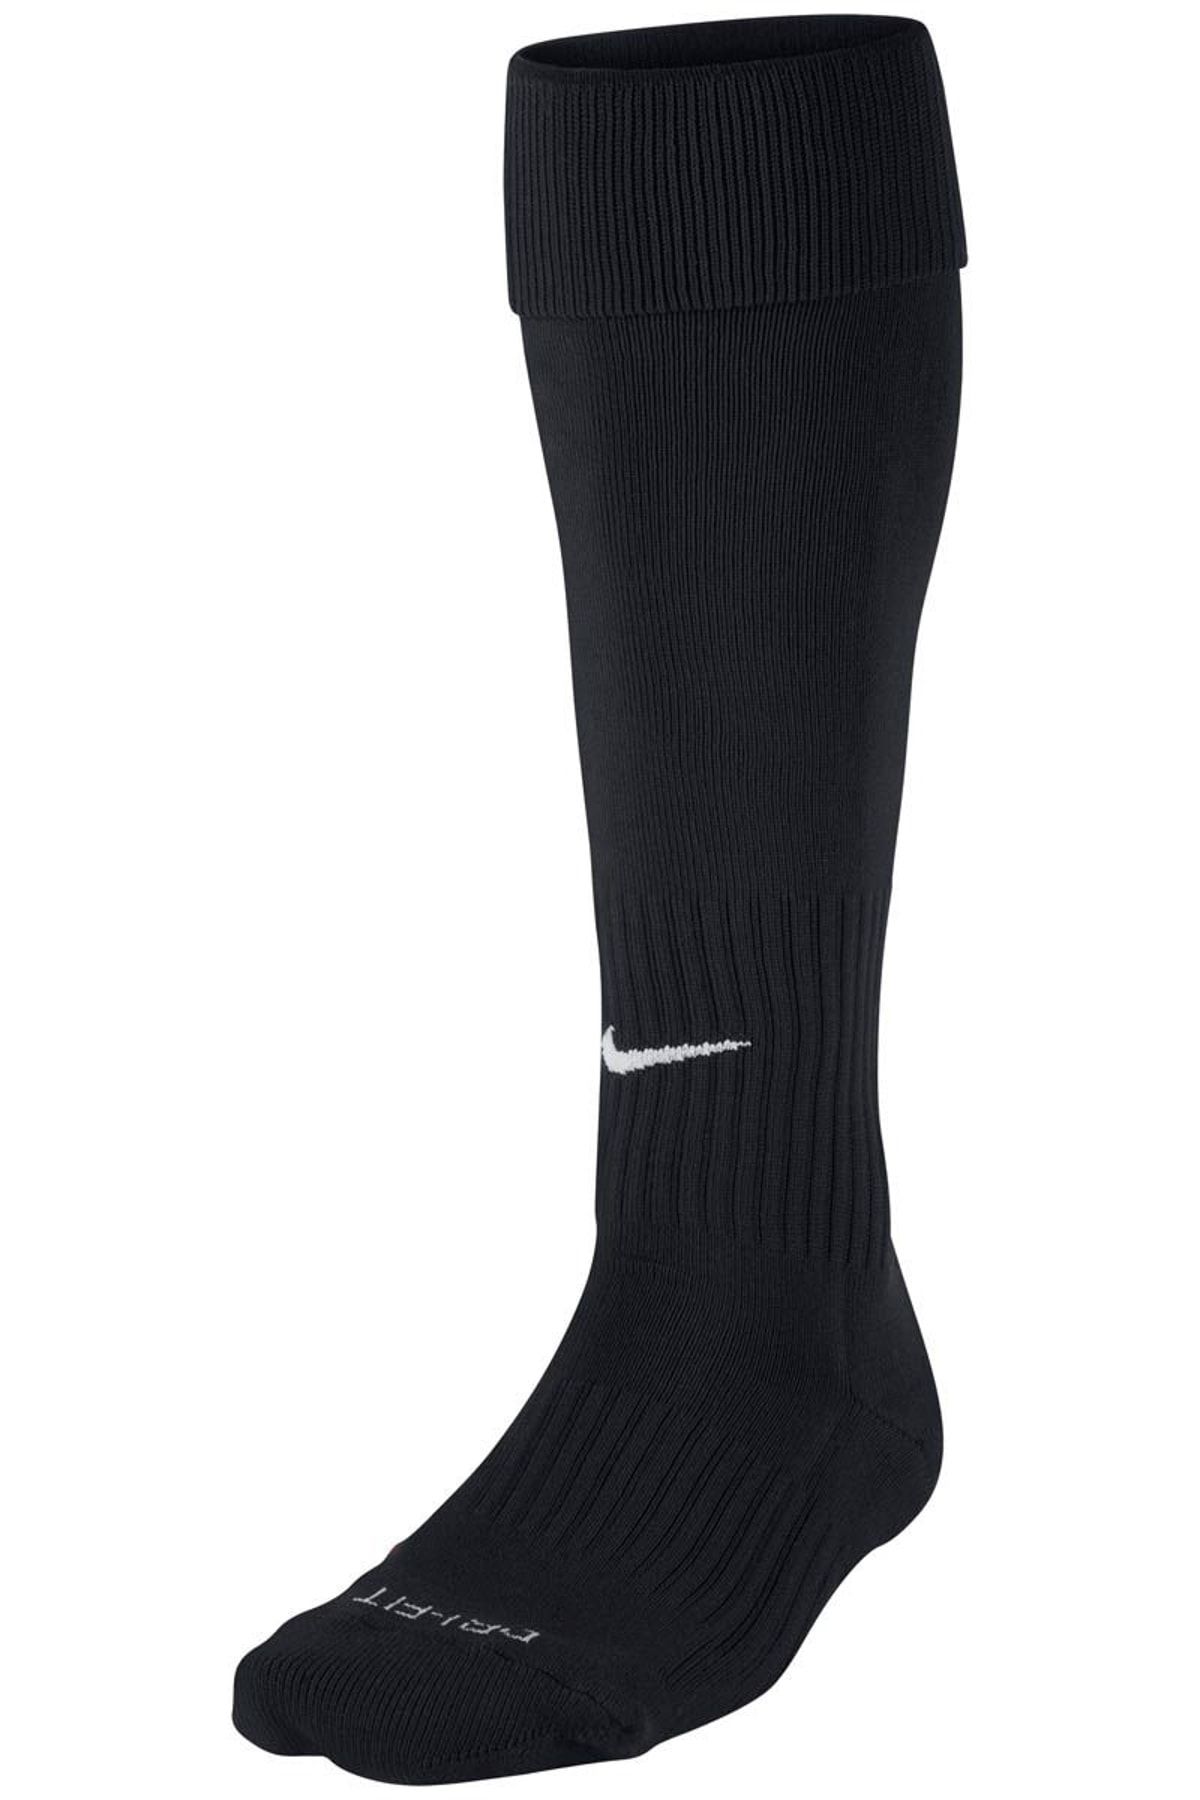 Nike Erkek Çorap - Tozluk Classic Football Dri-Fit -Sx4120-402